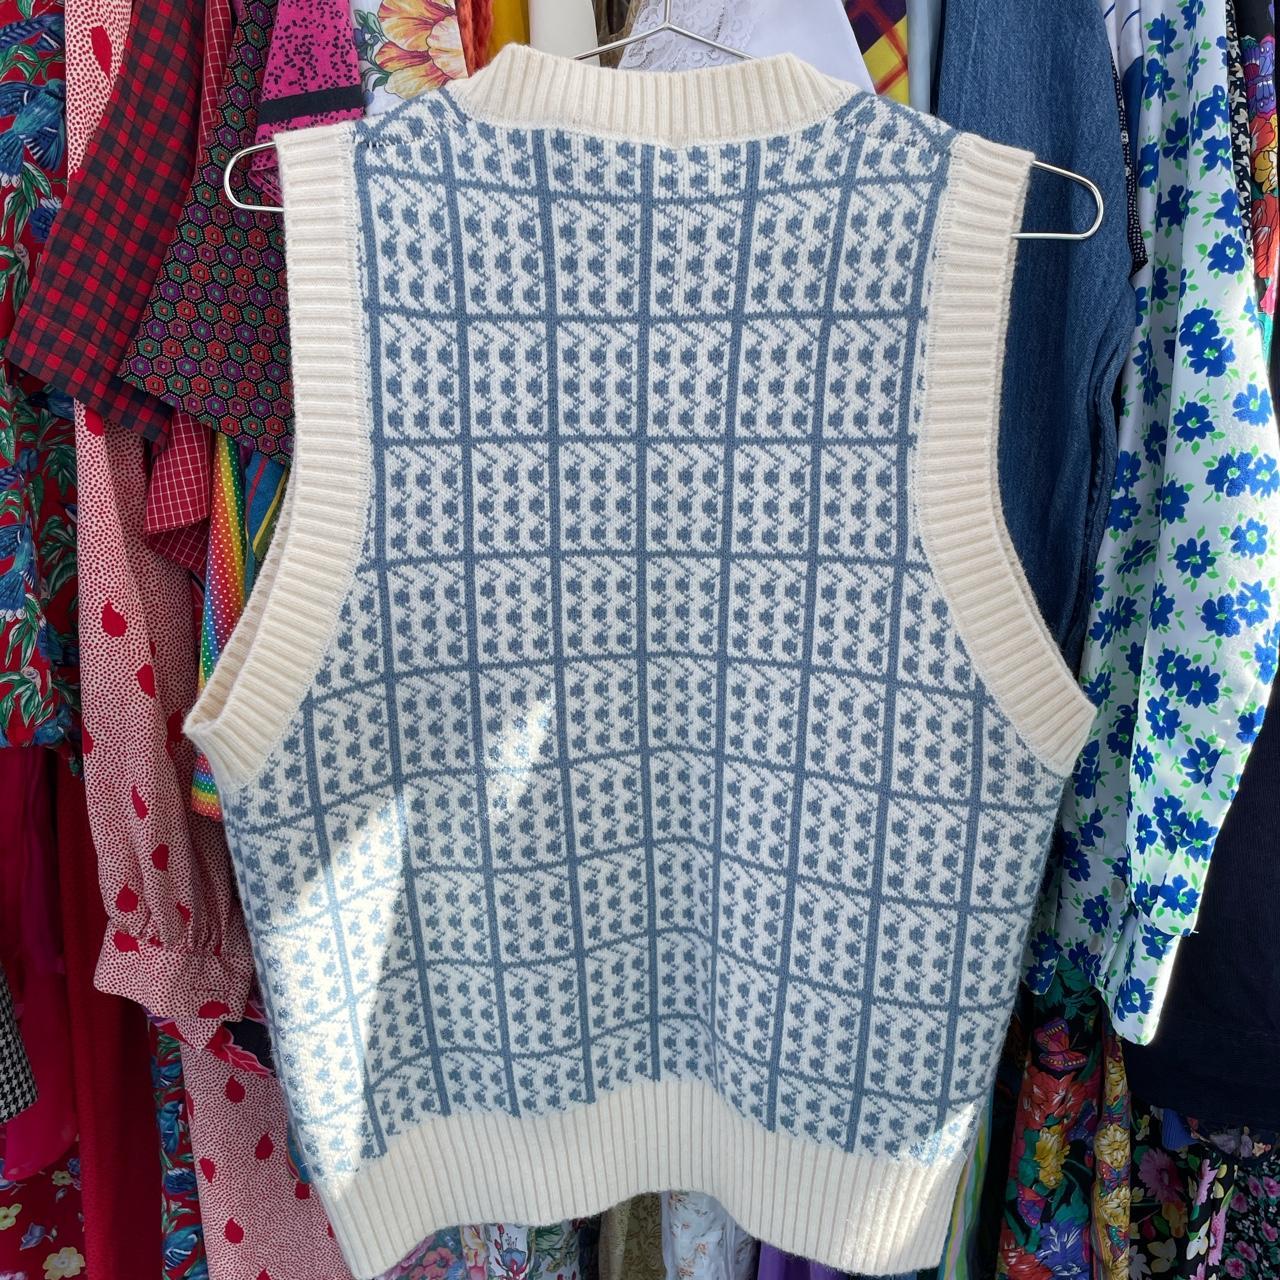 Cuuute sweater vest very Emma chamberlain - Depop